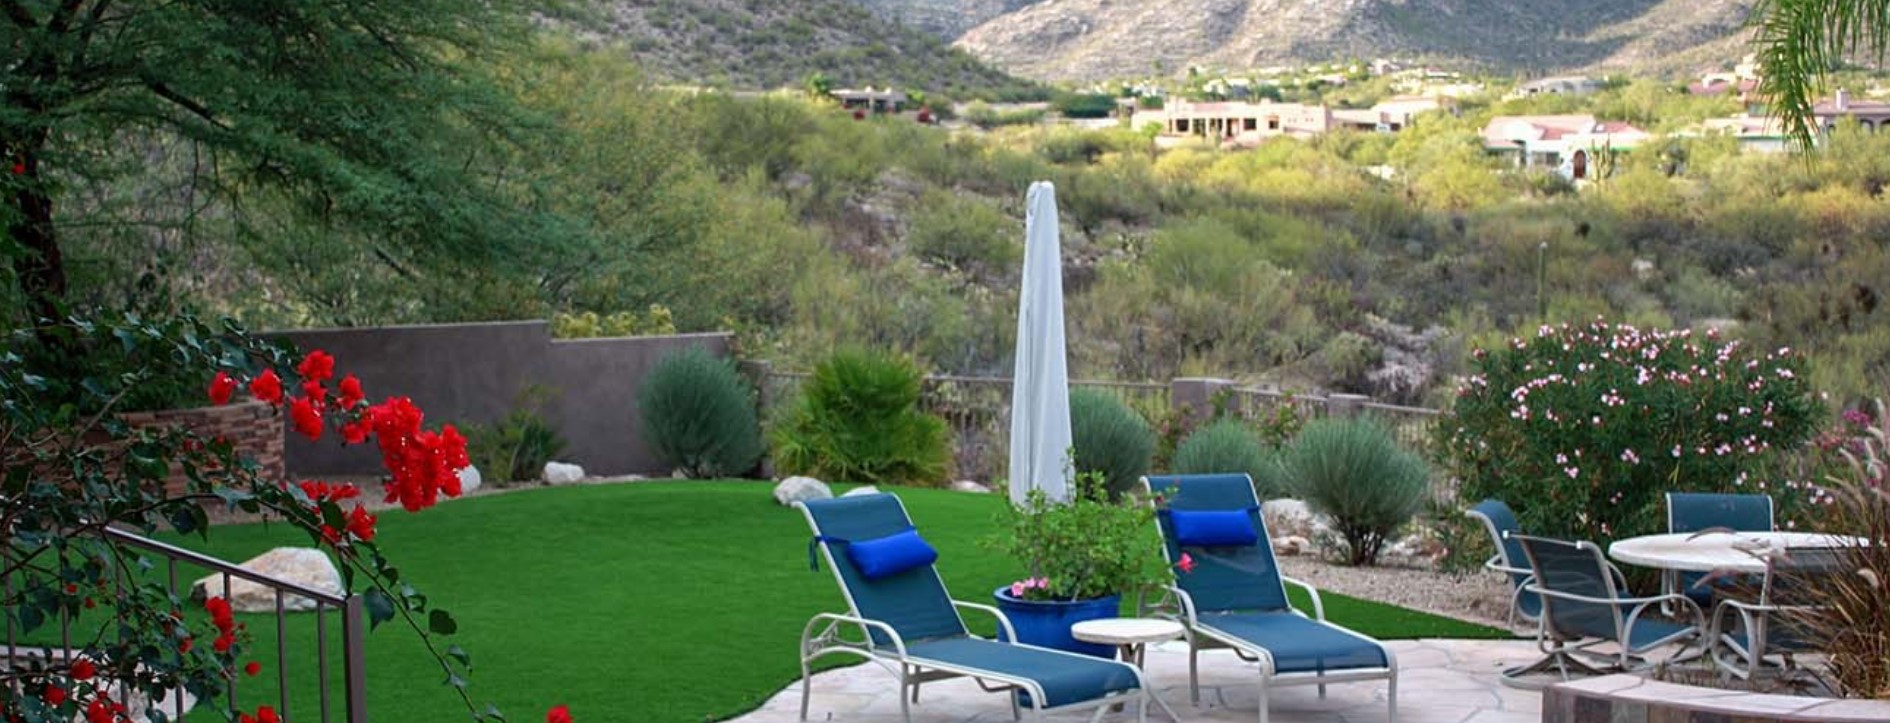 Tucson Artificial Grass